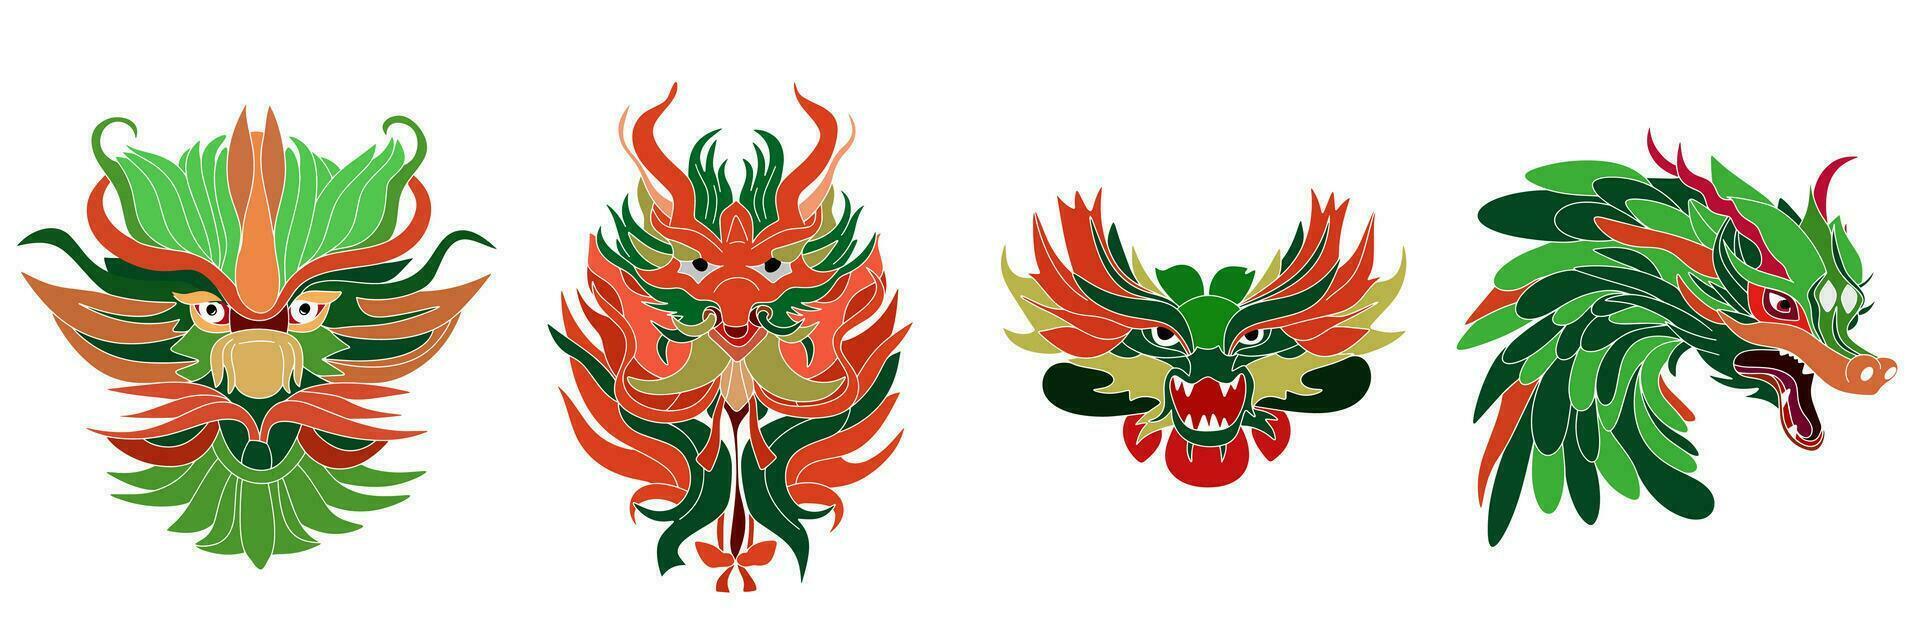 Set of green dragons. Hand drawn green dragon's head. Vector illustration.